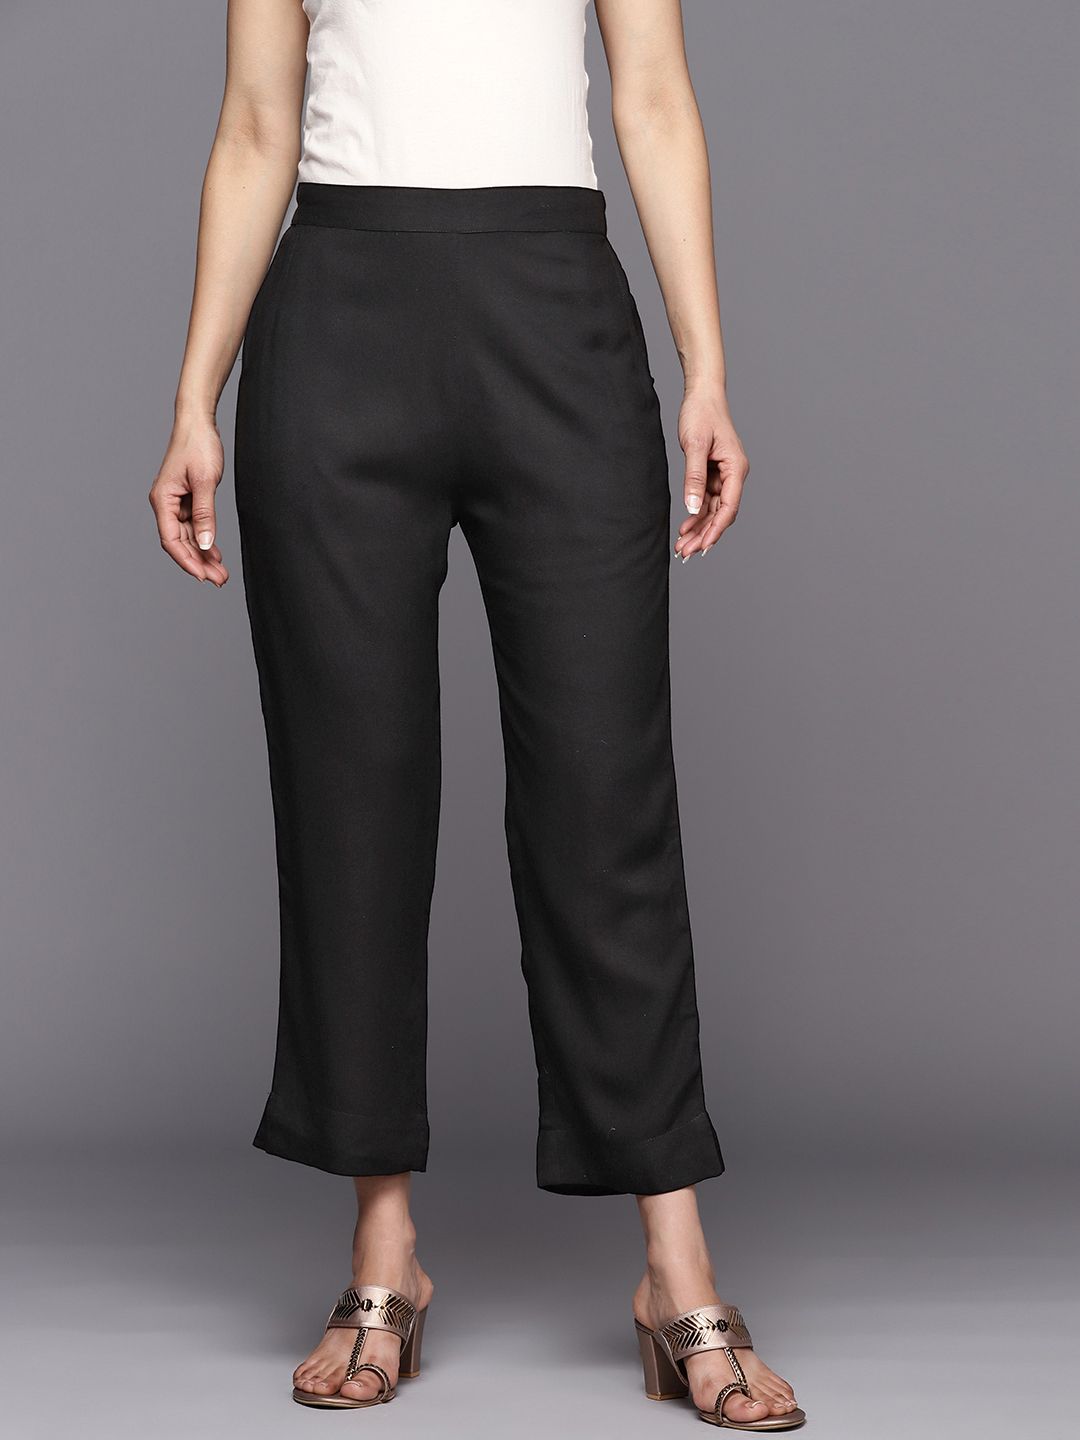 Libas Women Black Slim Fit Trousers Price in India